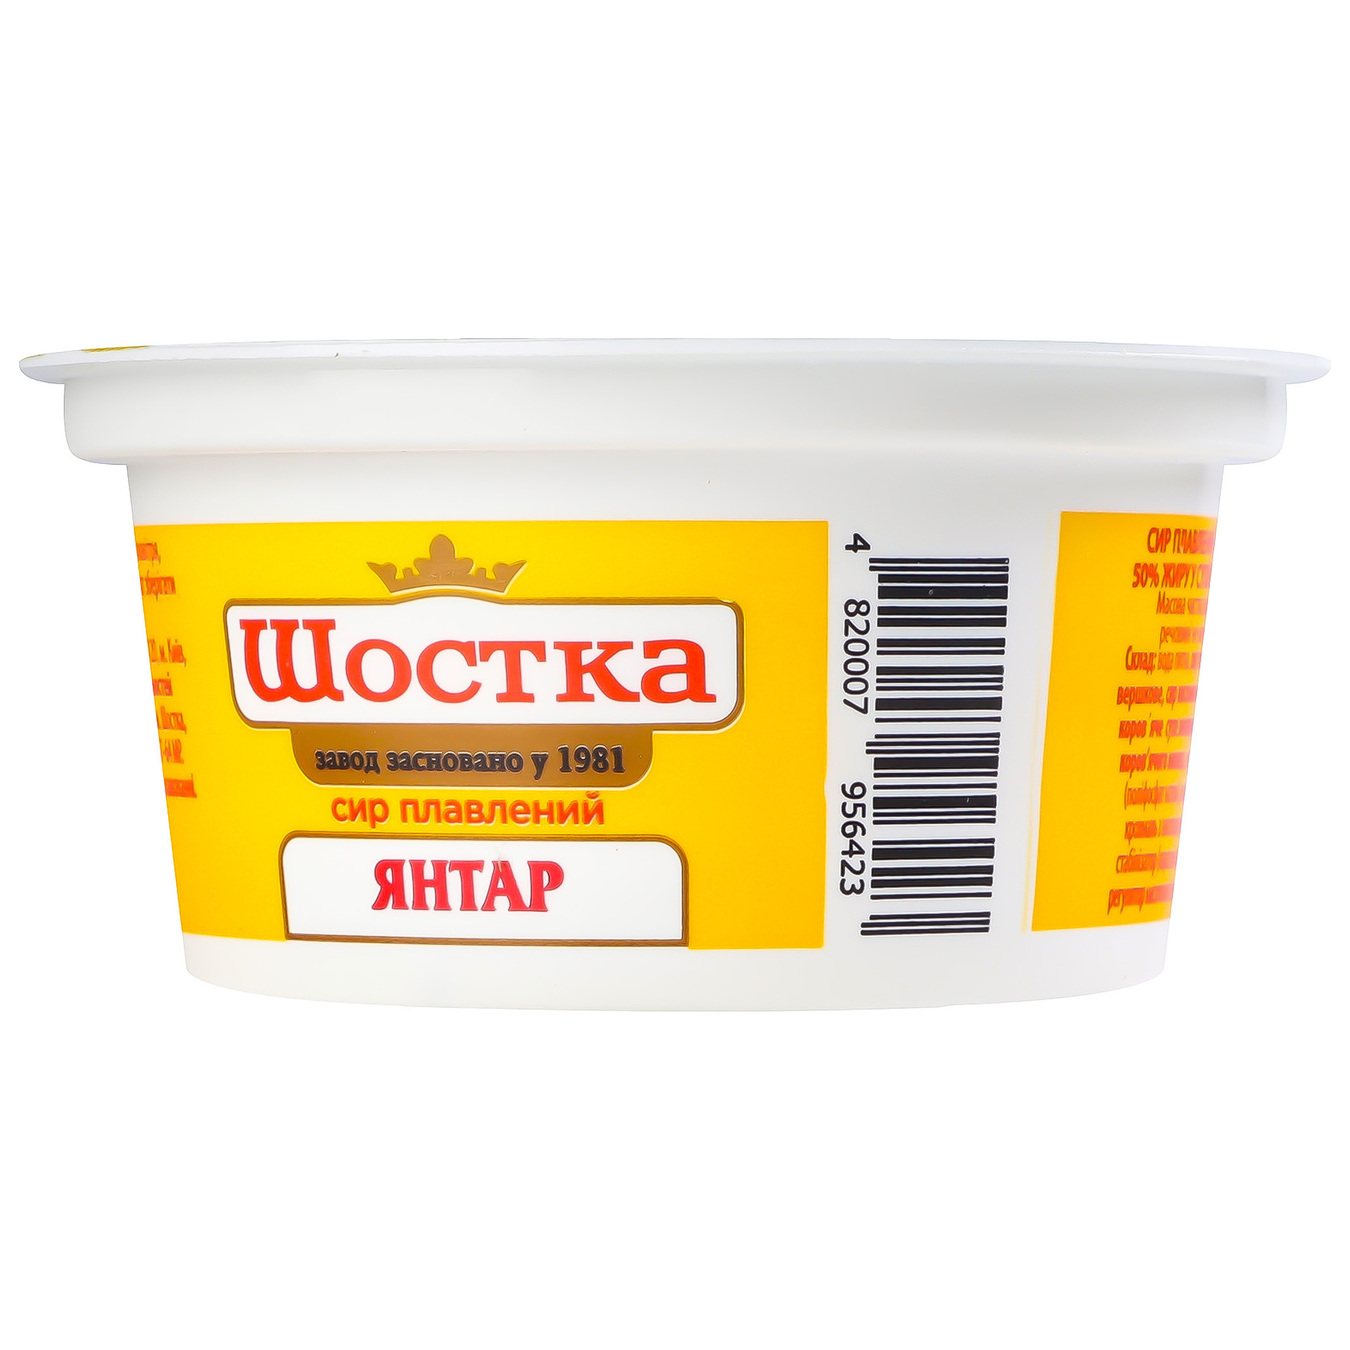 Shostka Yantar Processed Cheese 55% 150g 2